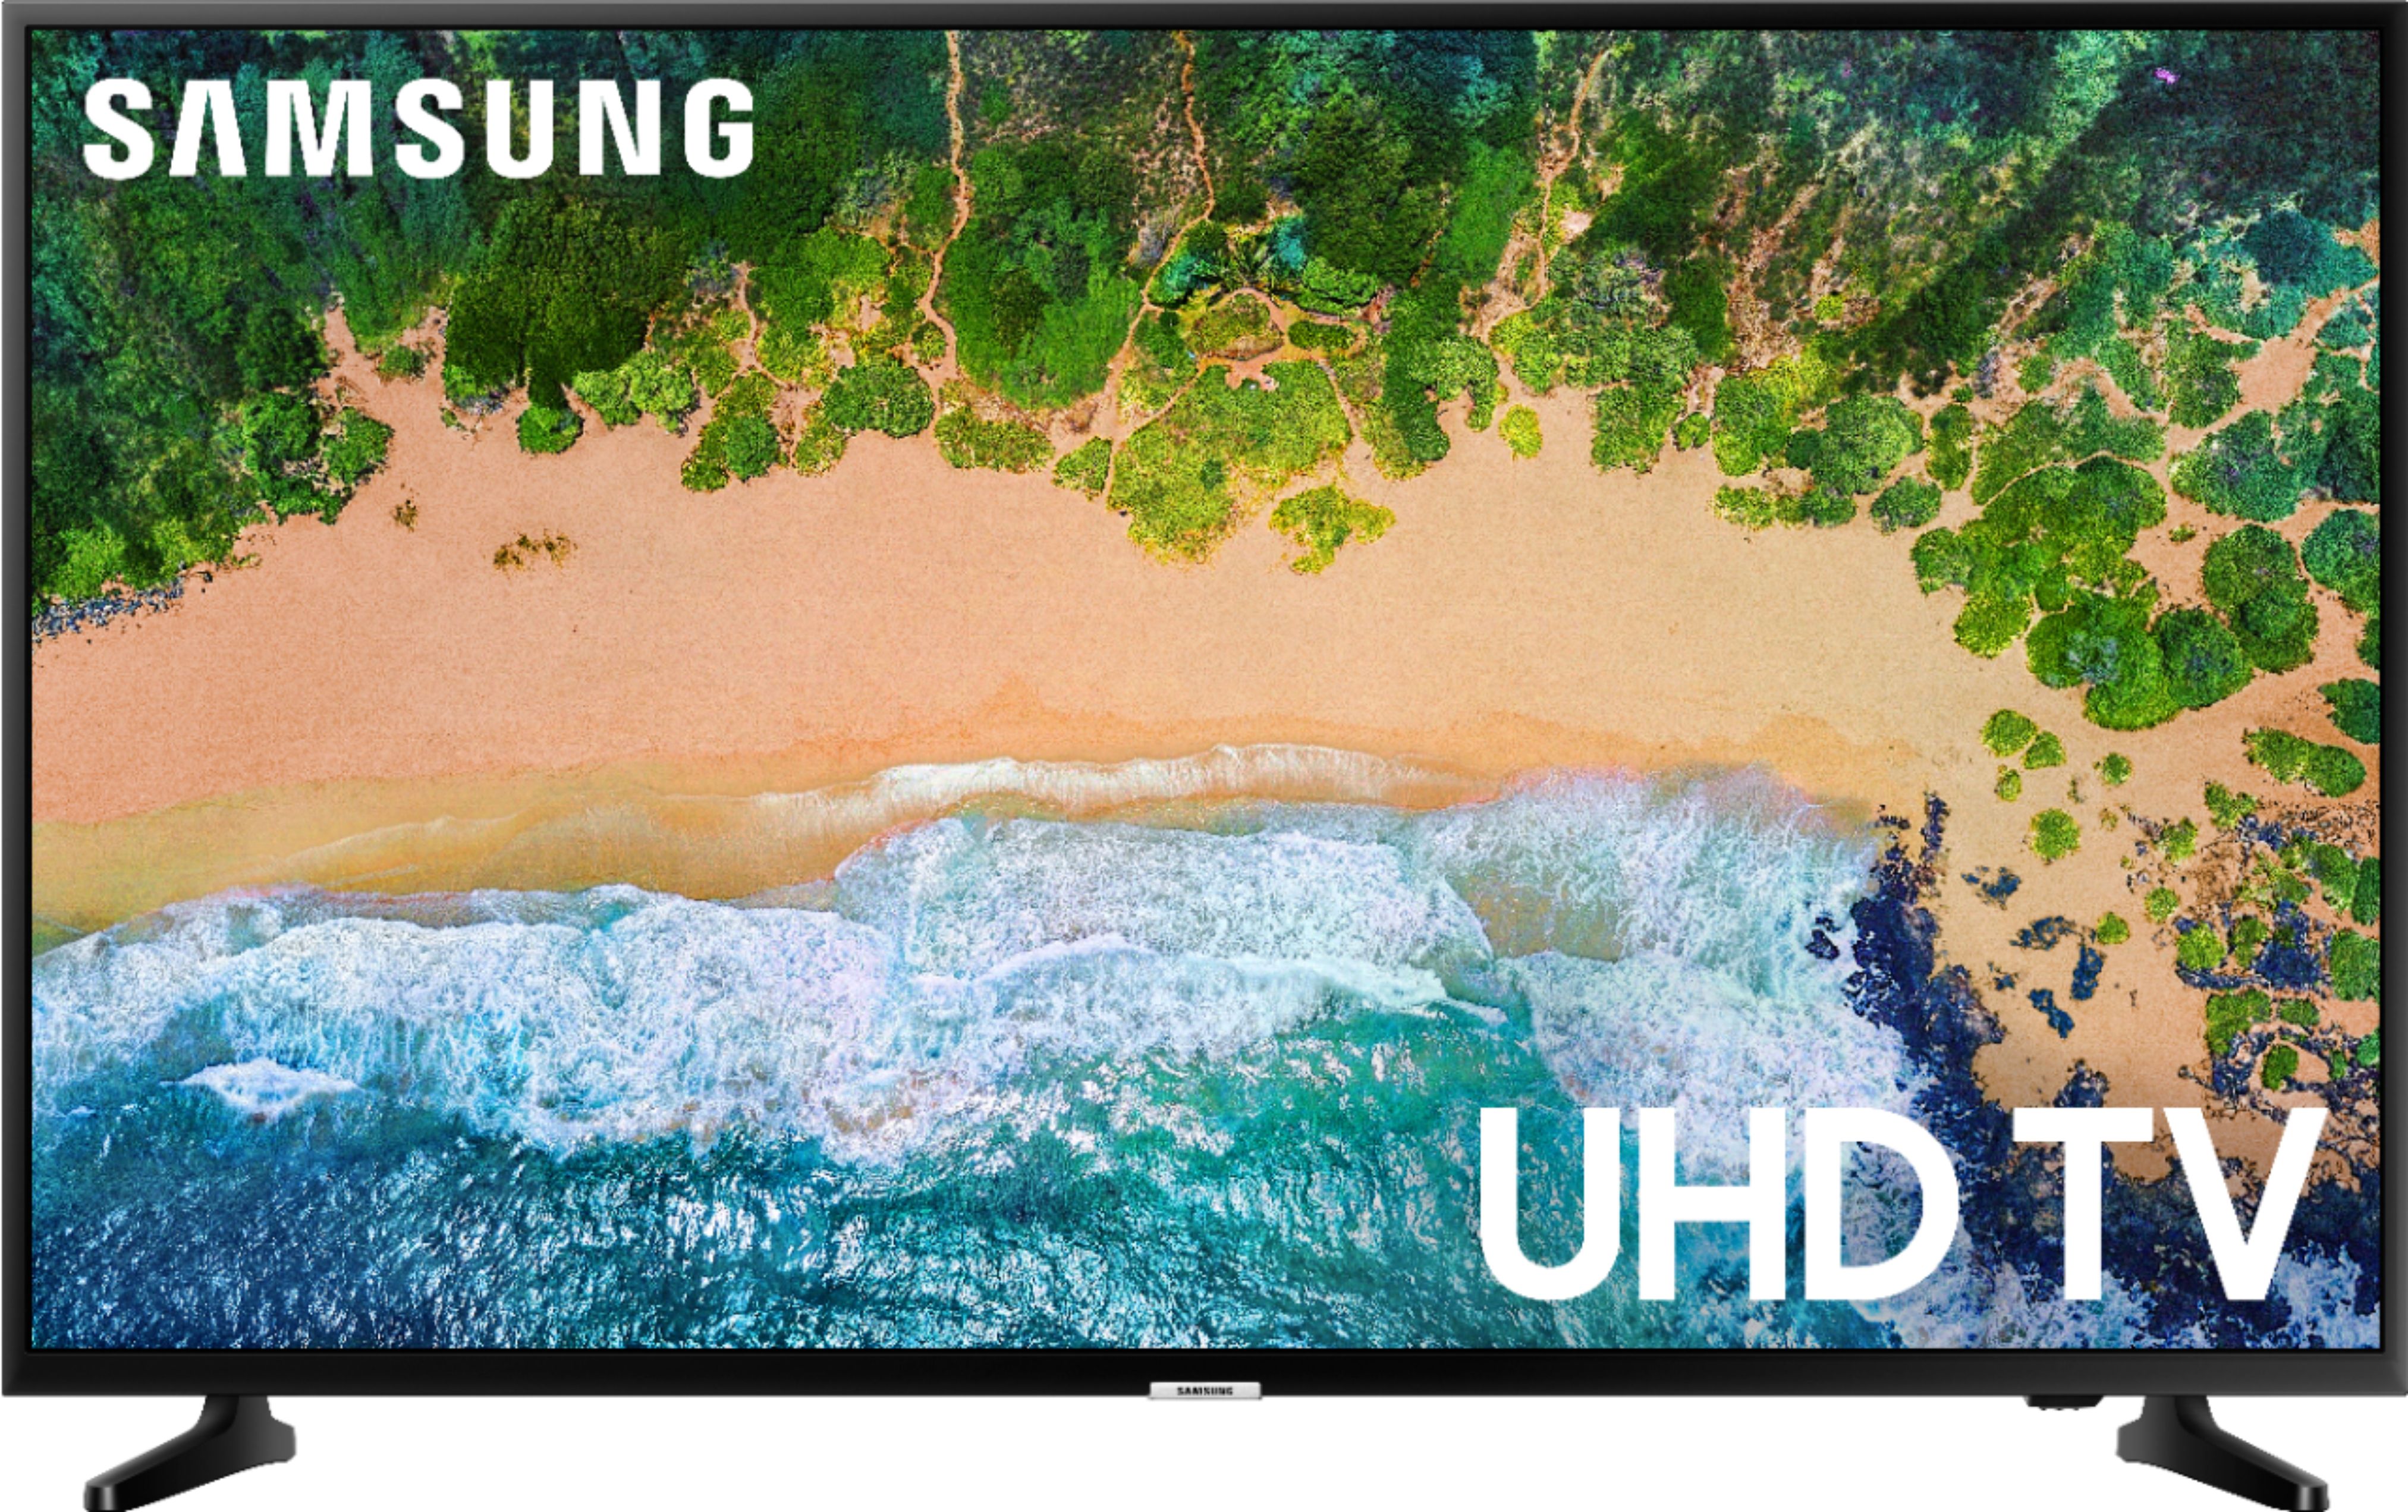  THE MOUNT STORE - Soporte de pared para TV Samsung 55 clase  LED NU6900 Series 2160p Smart 4K UHD TV con HDR Modelo UN55NU6900FXZA VESA  7.874x7.874 in extensión máxima 26 pulgadas 